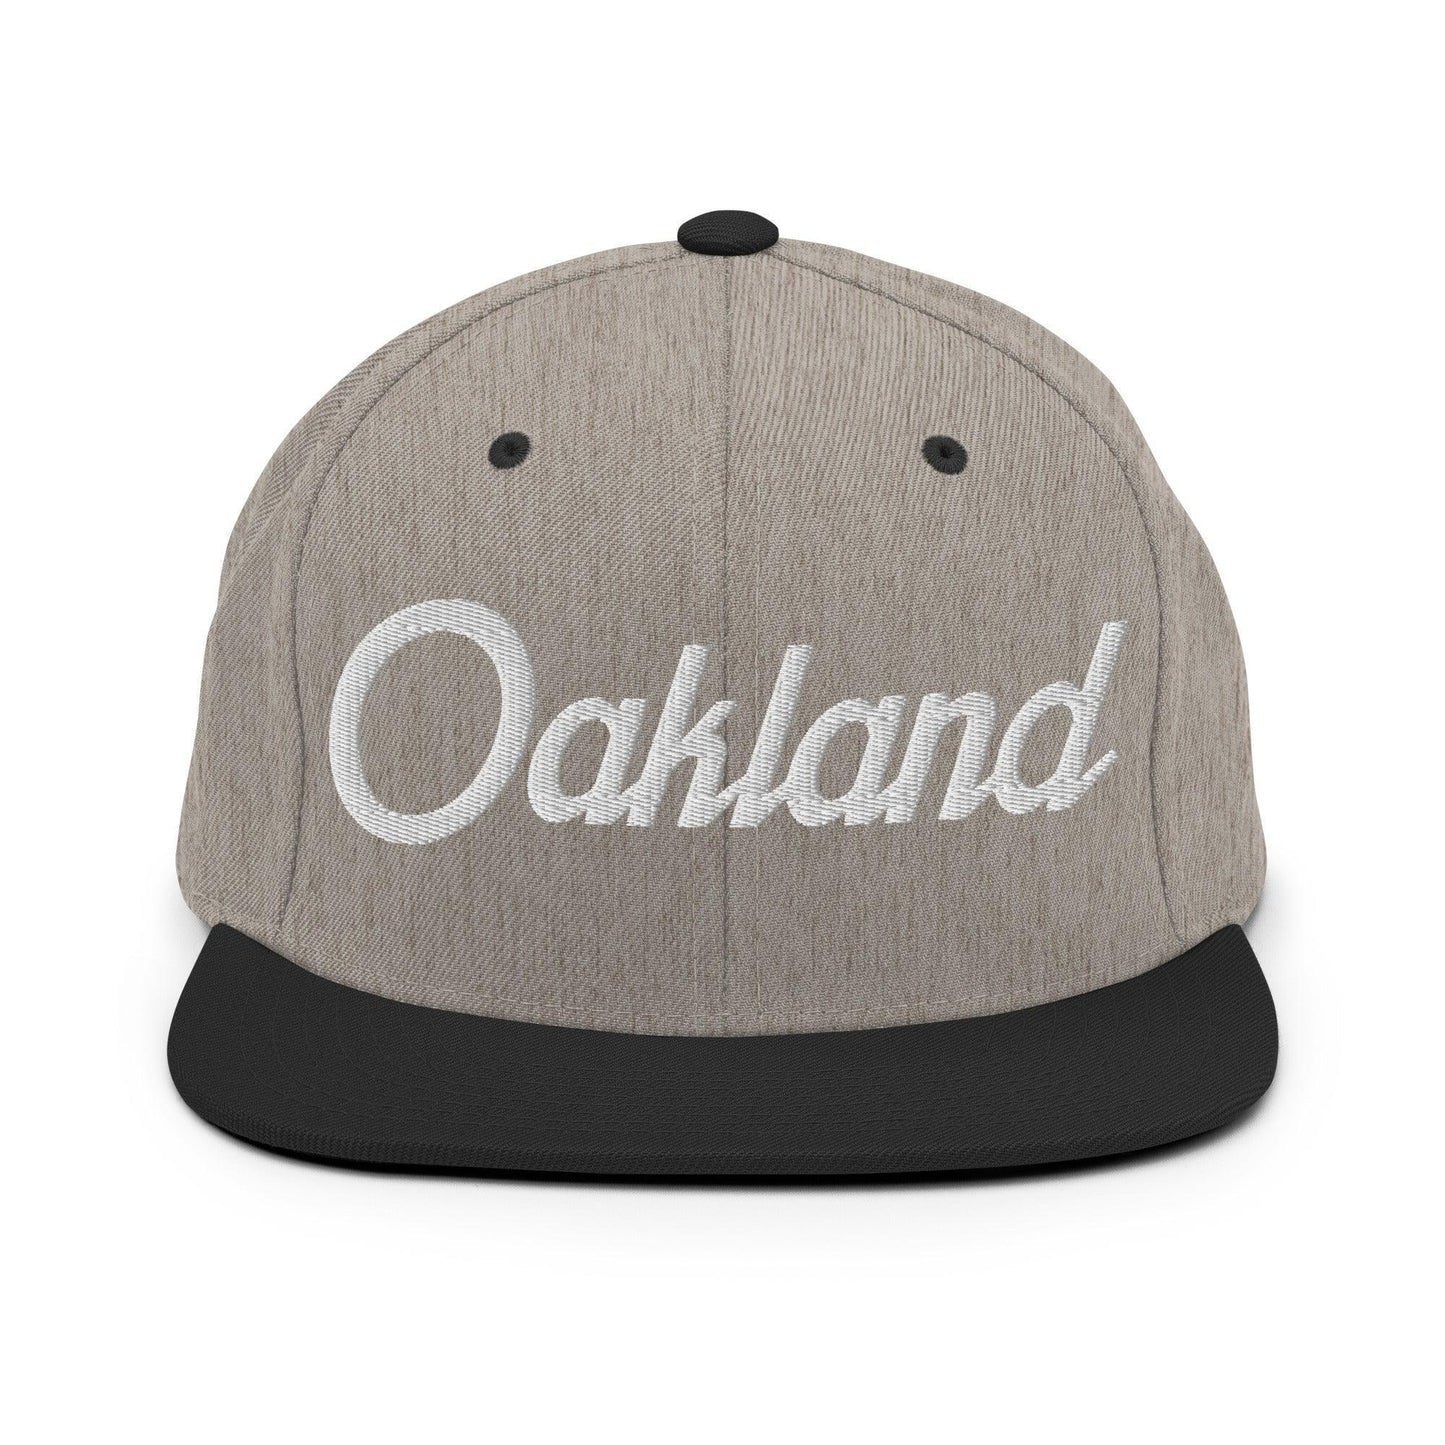 Oakland Script Snapback Hat Heather/Black